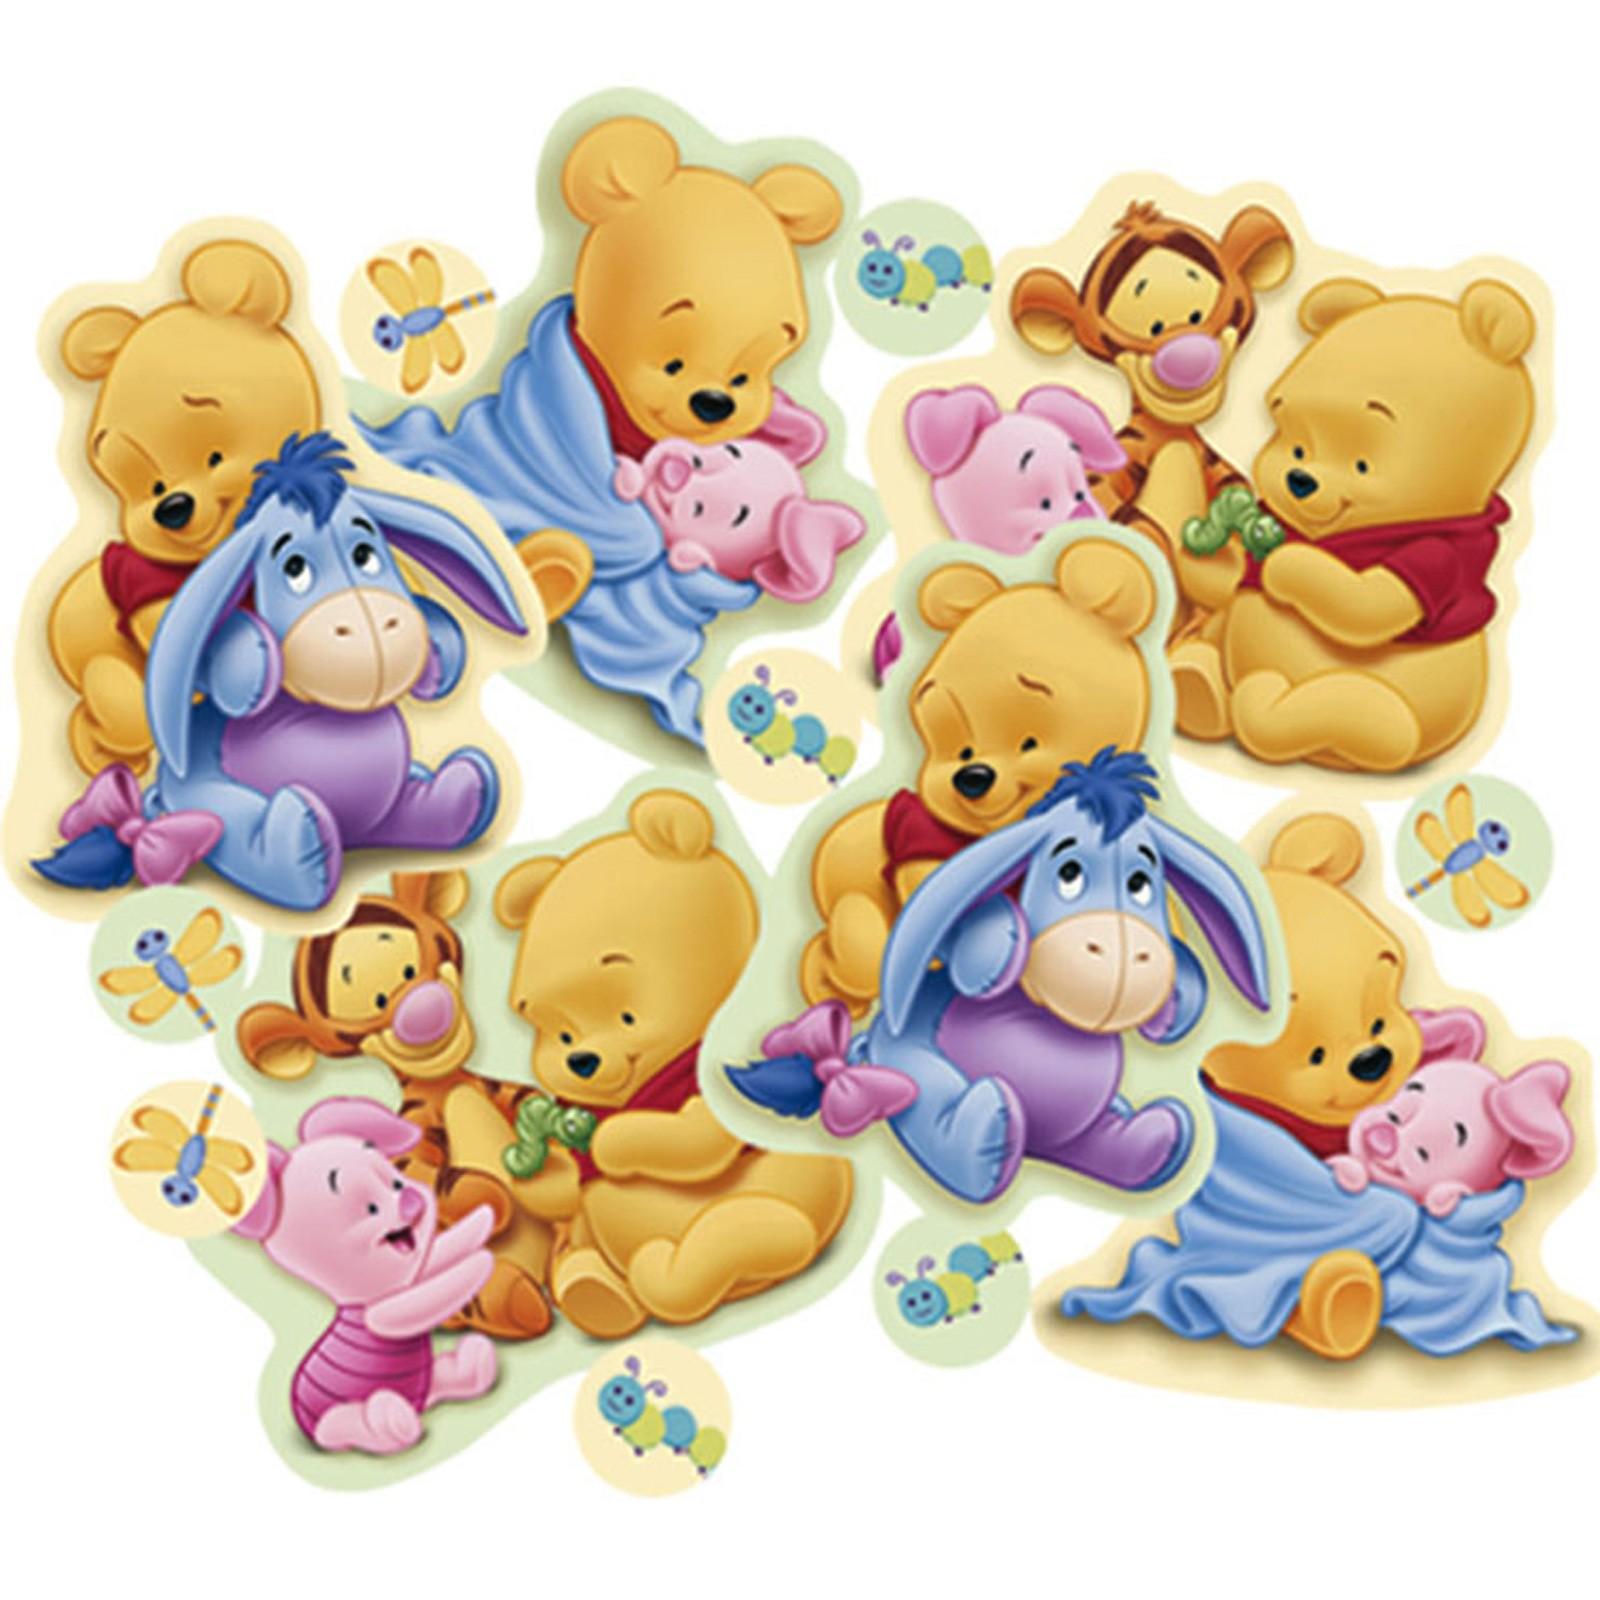 Pooh Bear Wallpaper Baby Pooh Photo 24007561 Fanpop | HD ...